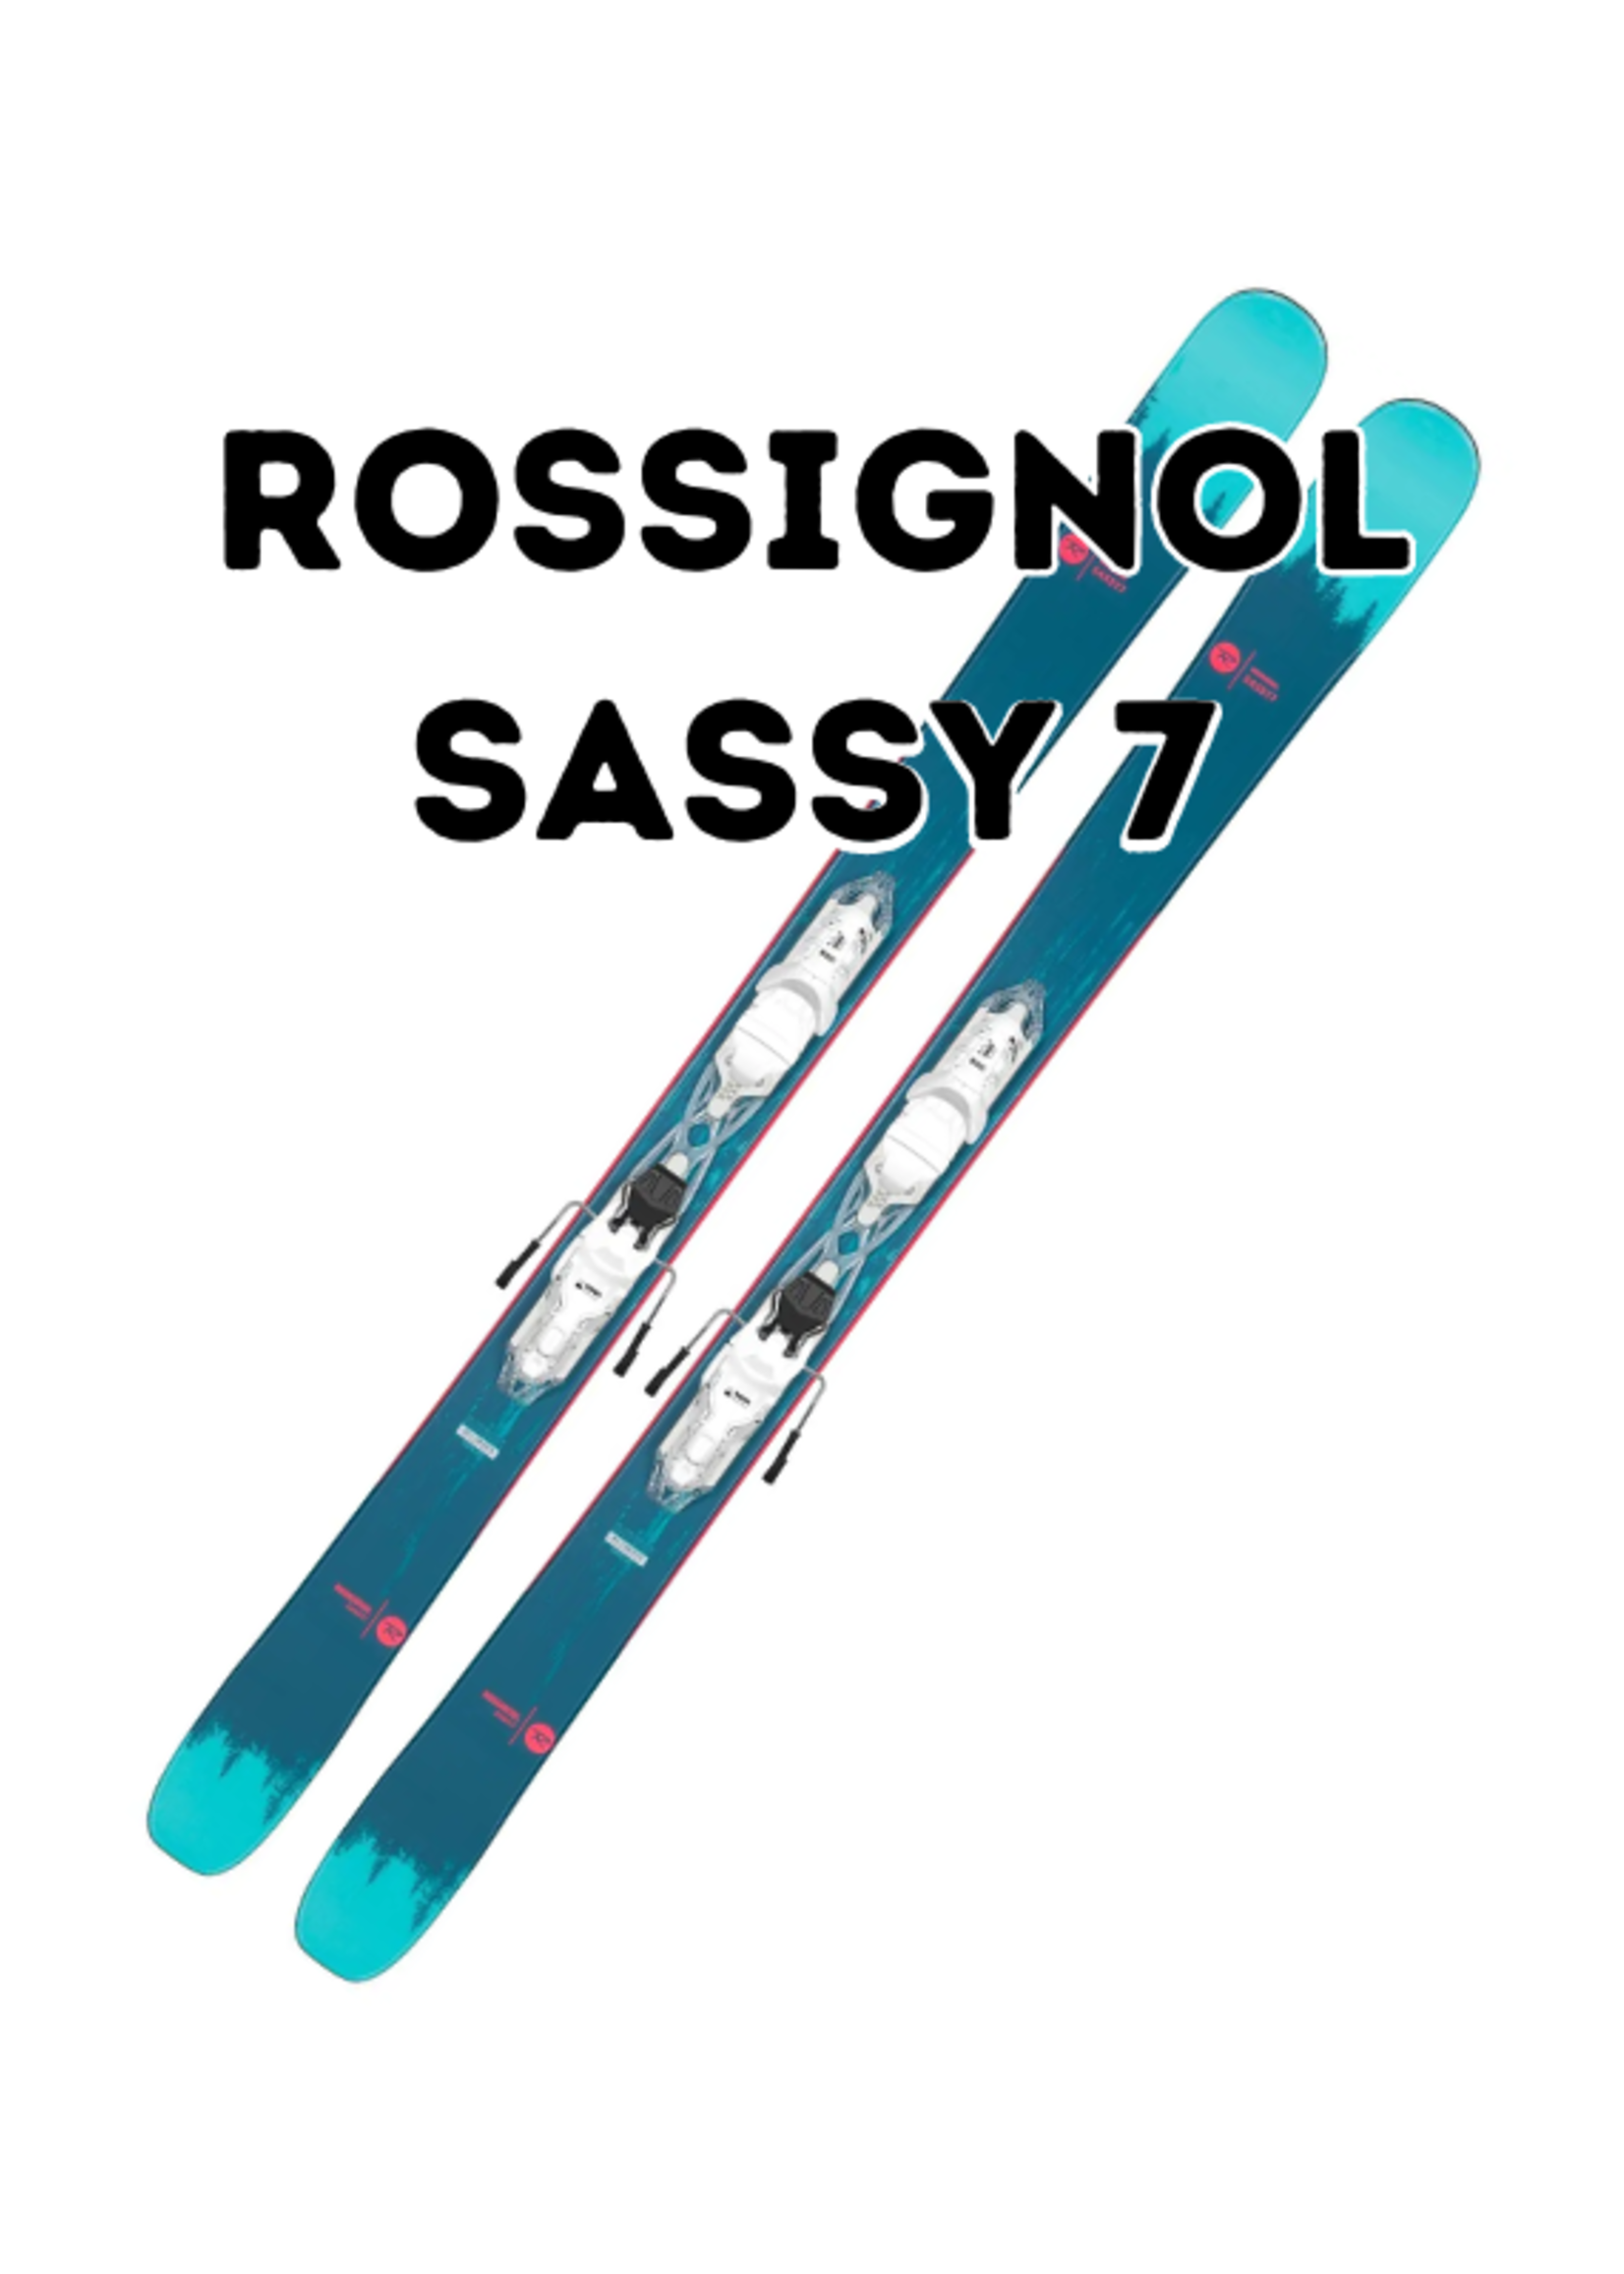 Rossignol Rossignol Sassy 7 xp/xp w 10 b93 whte spk 2020